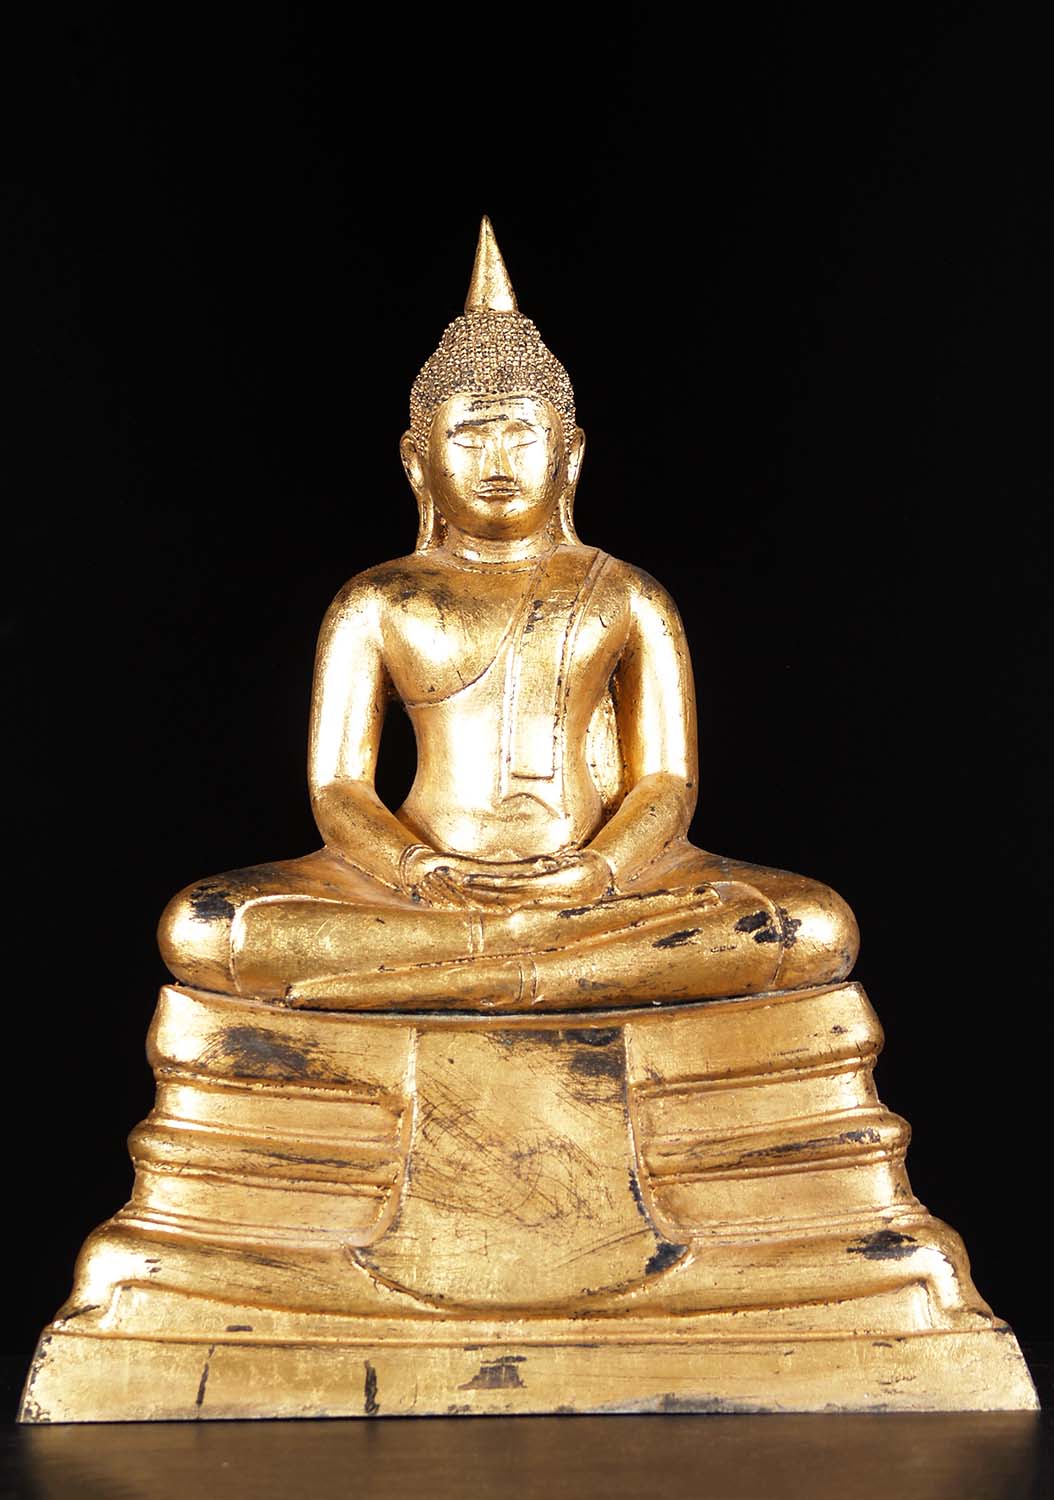 thailand buddha